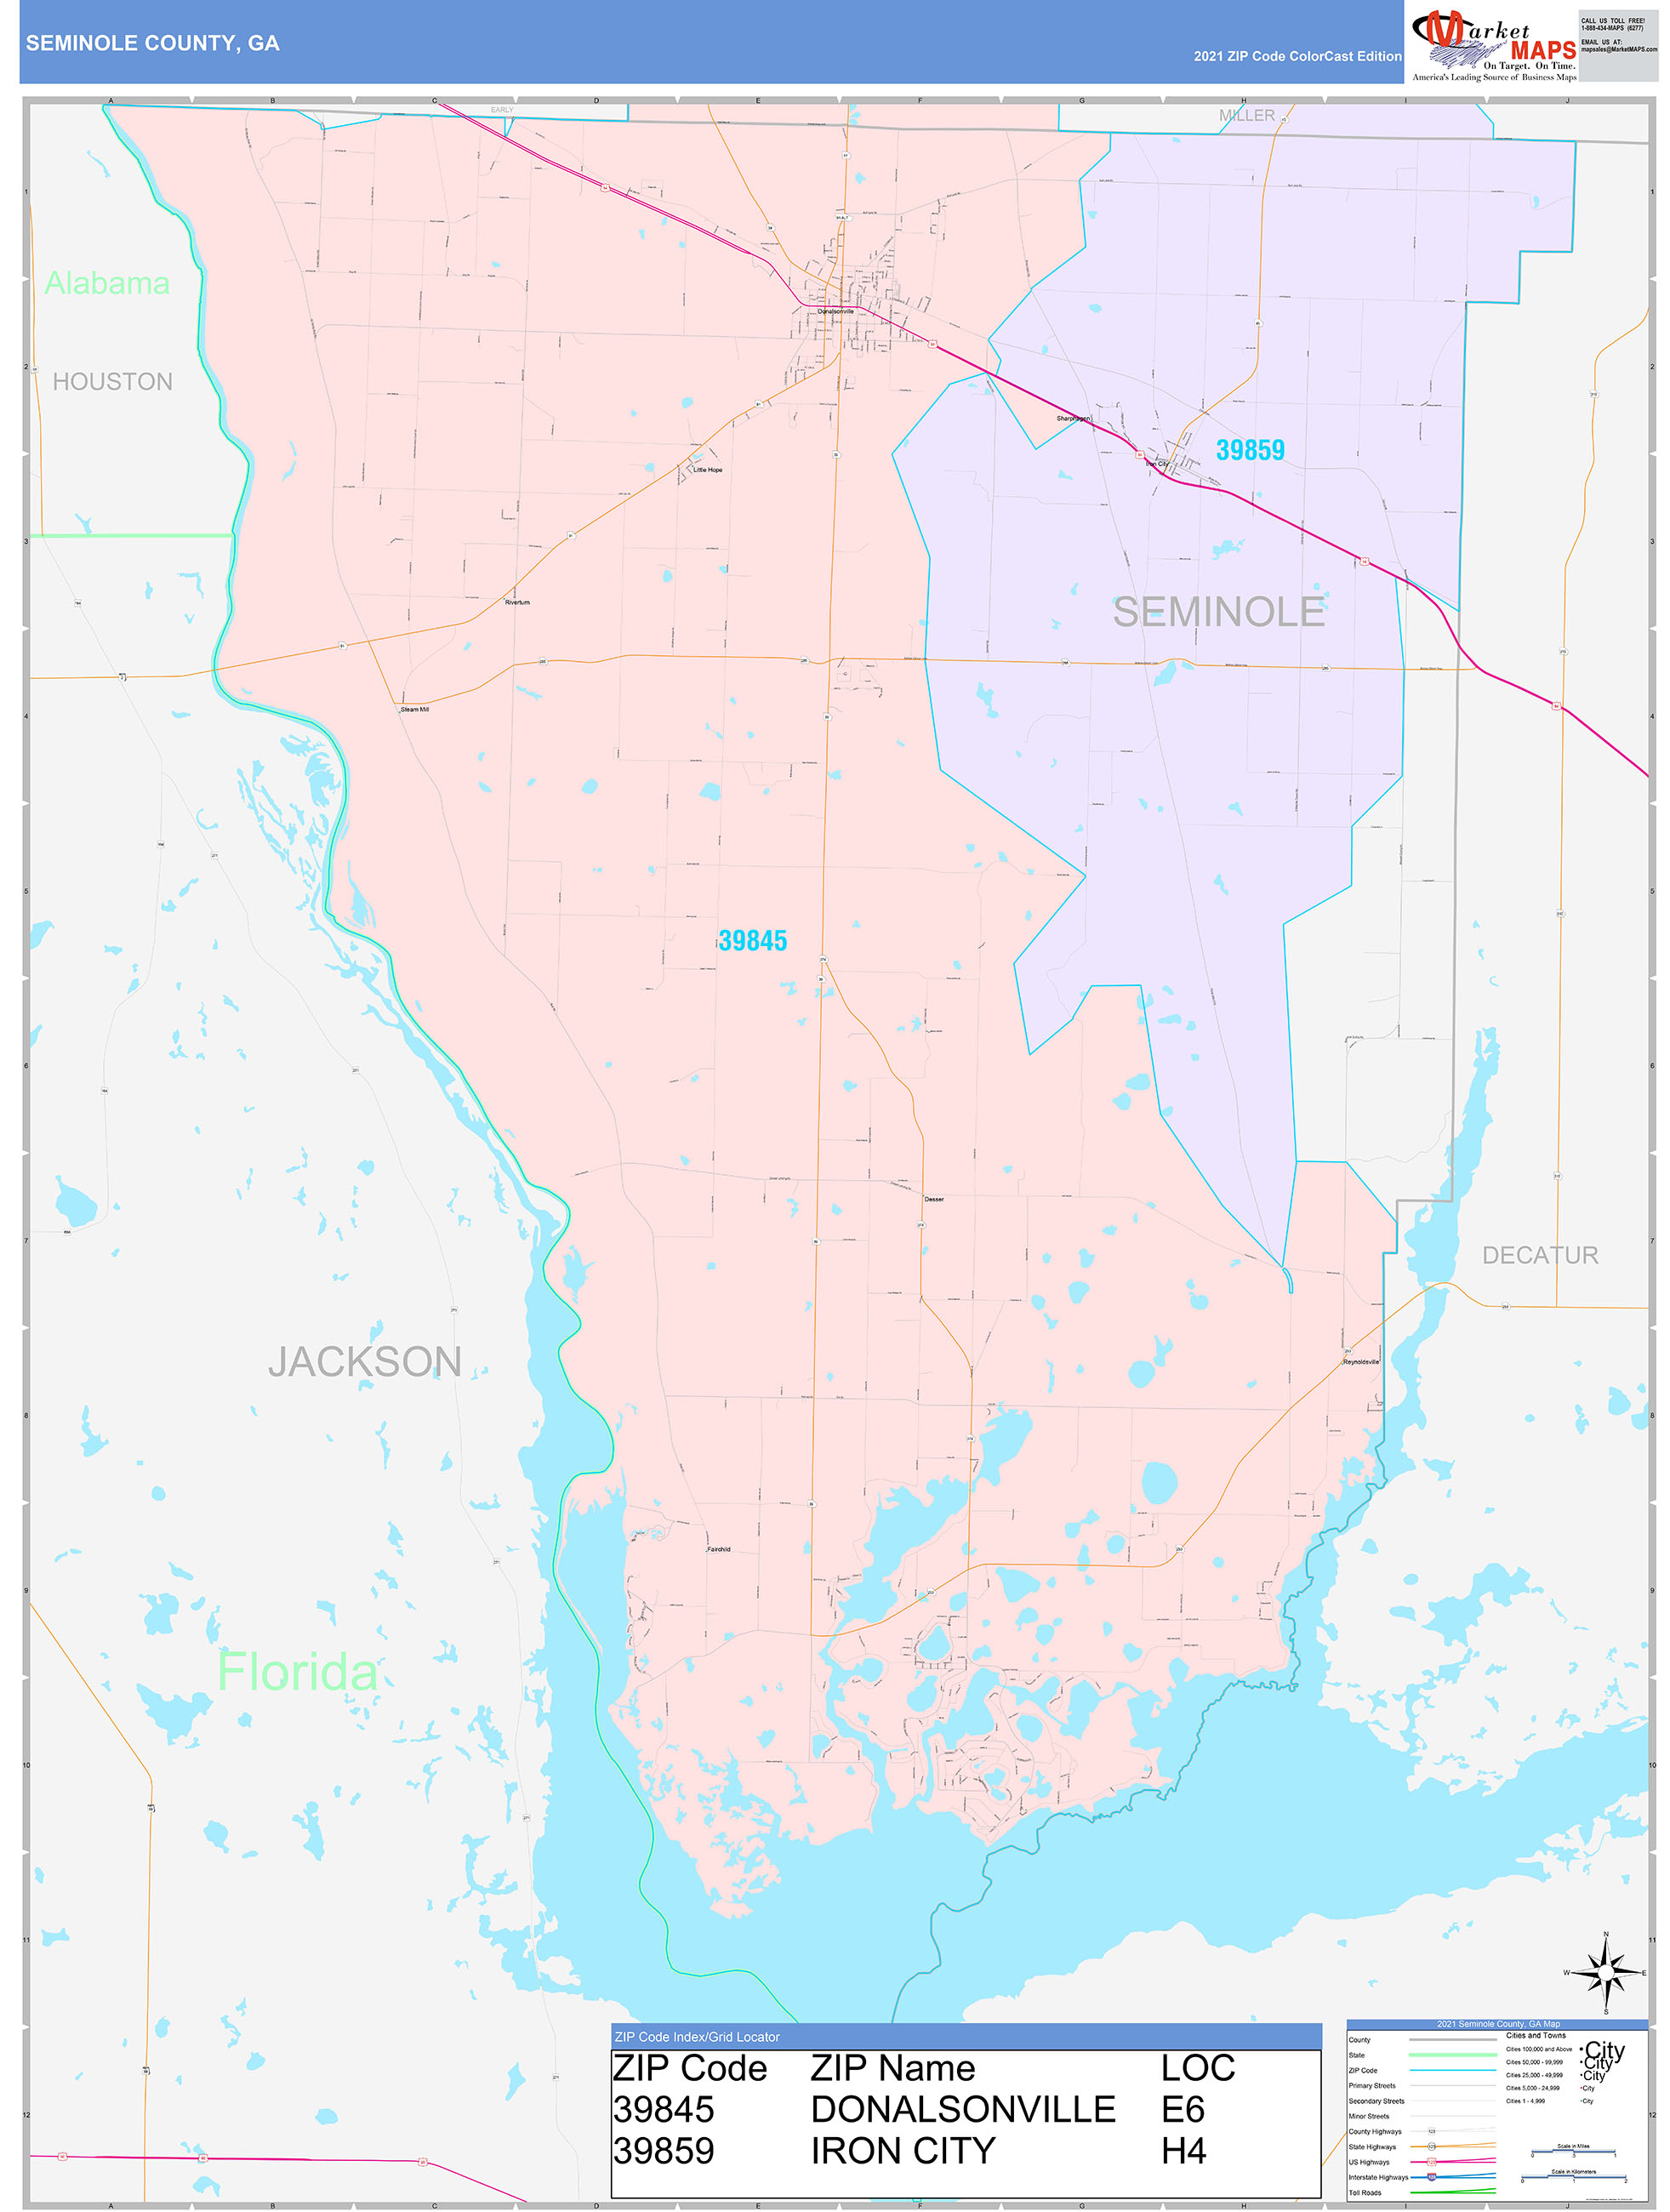 Seminole County, GA Wall Map Color Cast Style by MarketMAPS